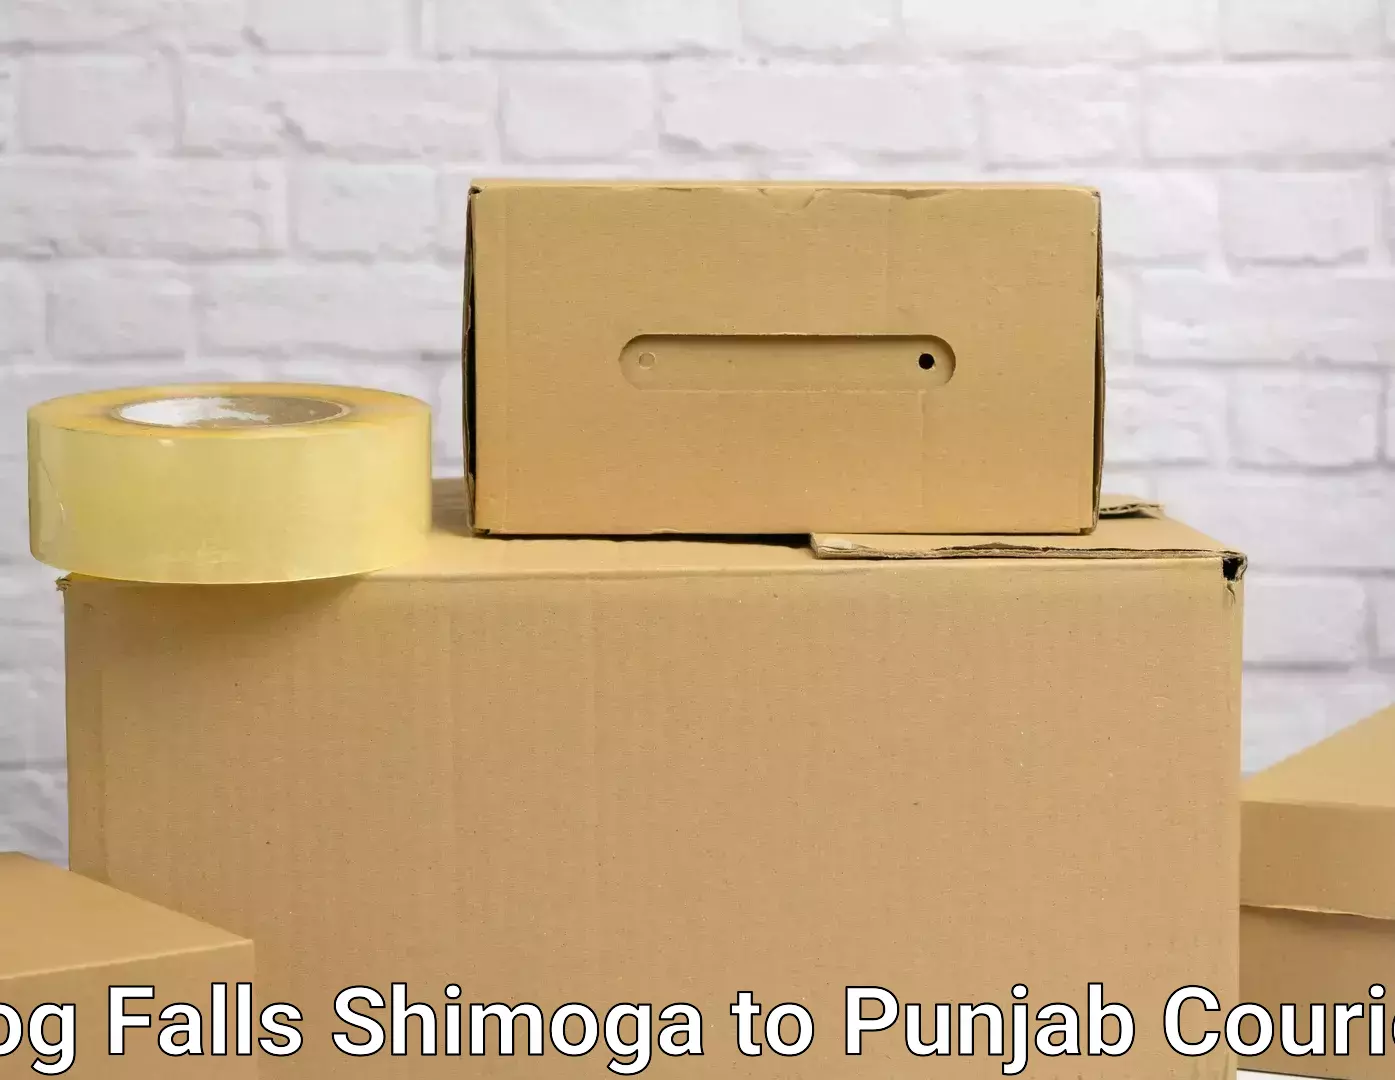 Professional moving company Jog Falls Shimoga to Punjab Agricultural University Ludhiana